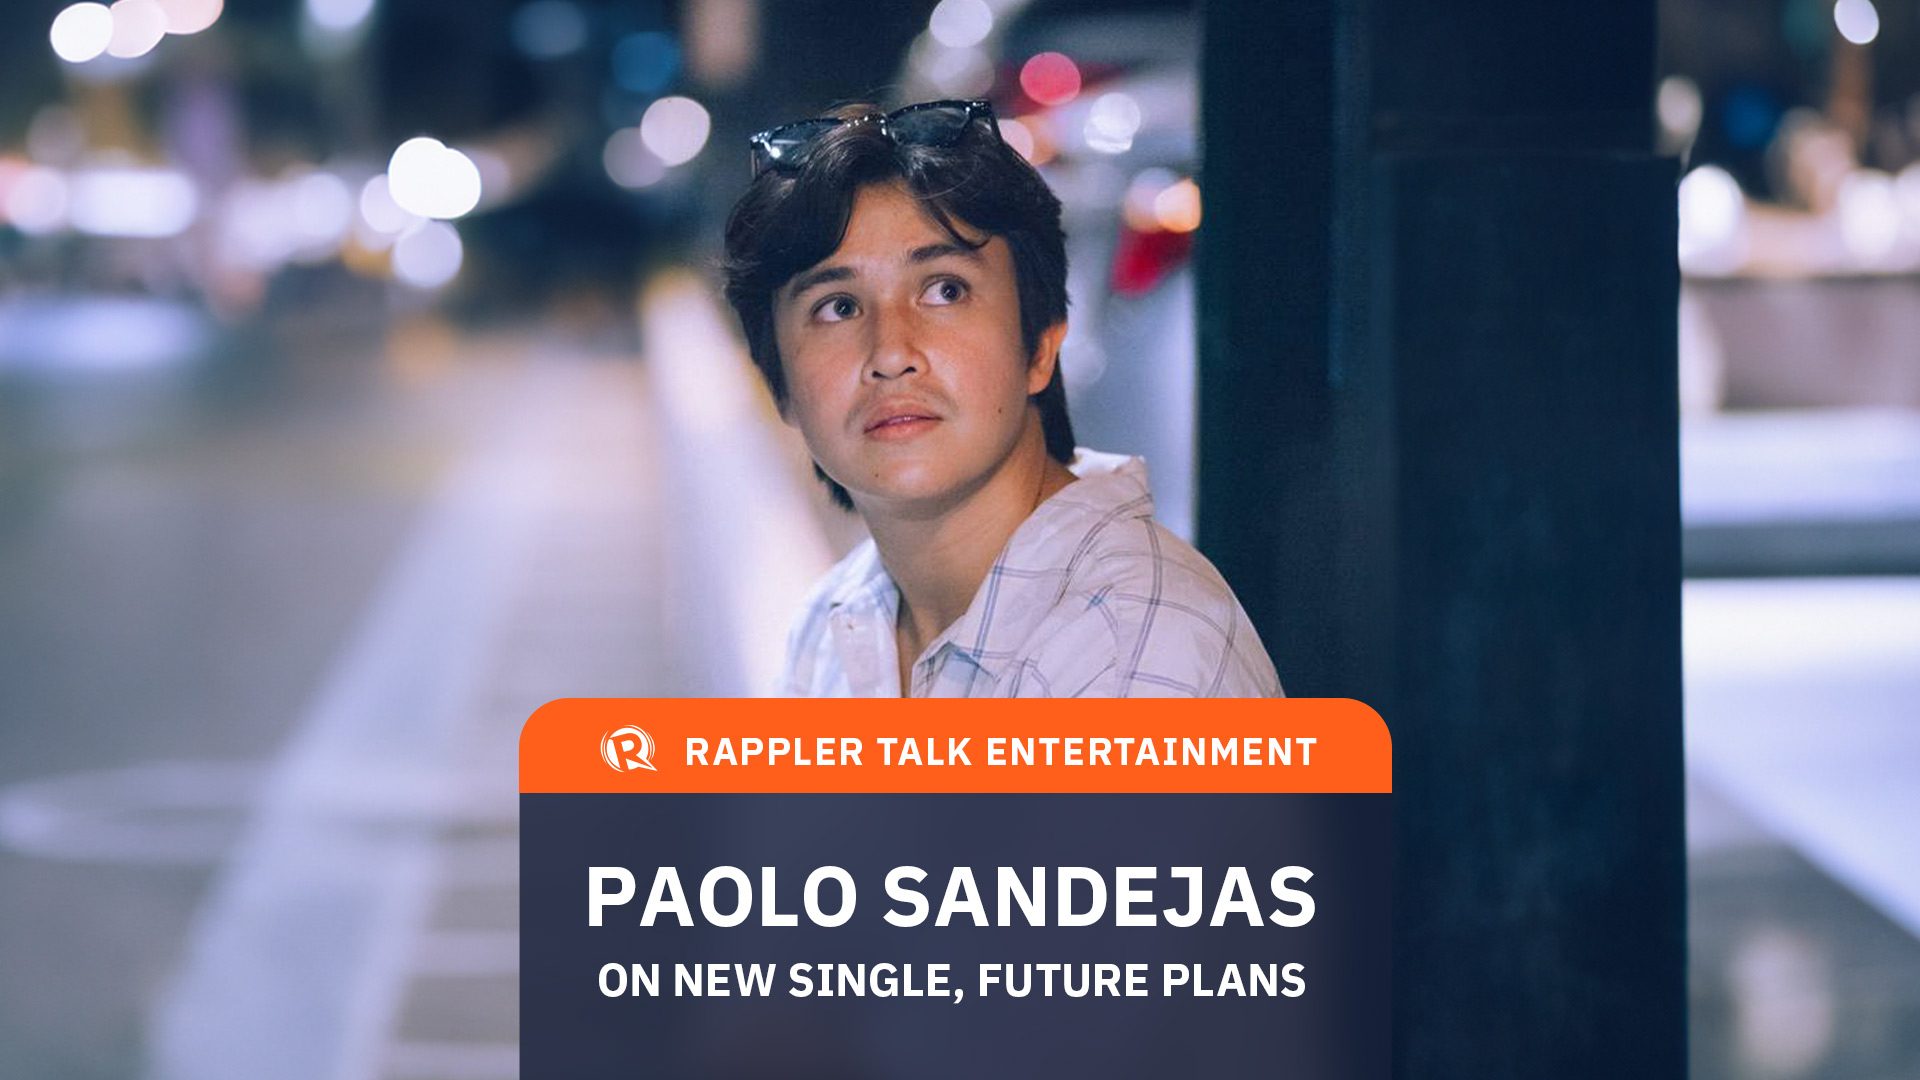 Rappler Talk Entertainment: Paolo Sandejas on new single, future plans